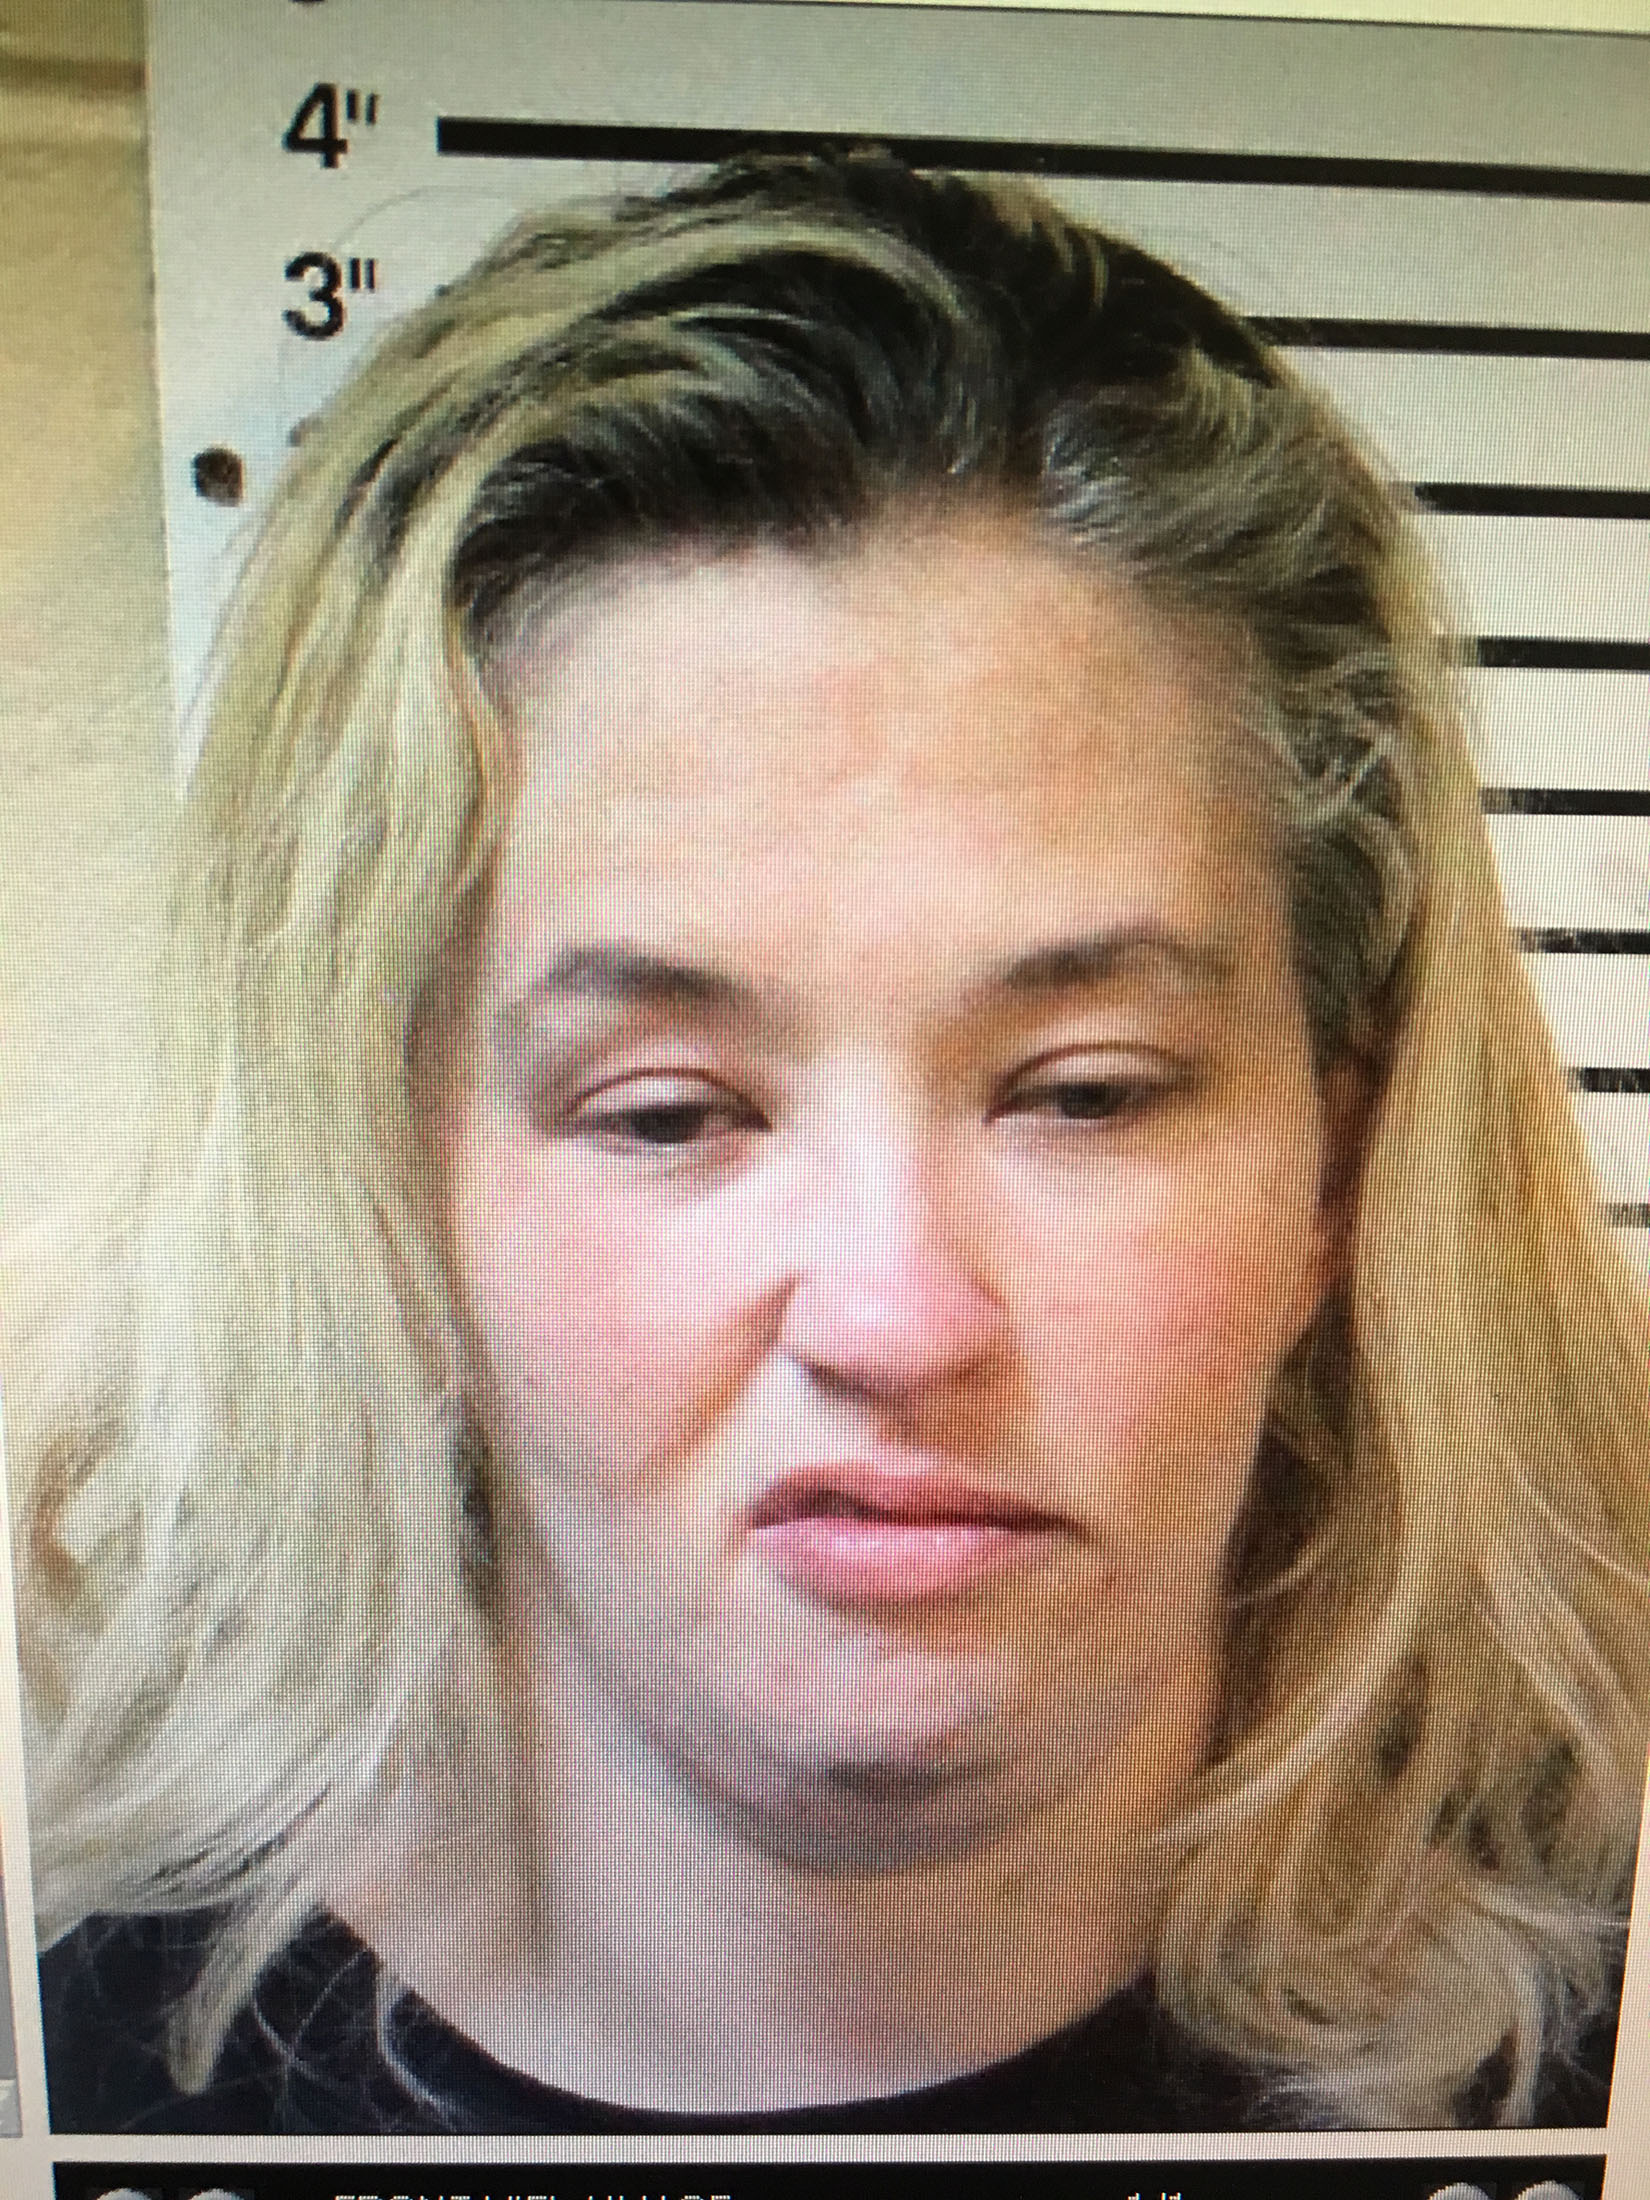 She was arrested for drug possession in 2019